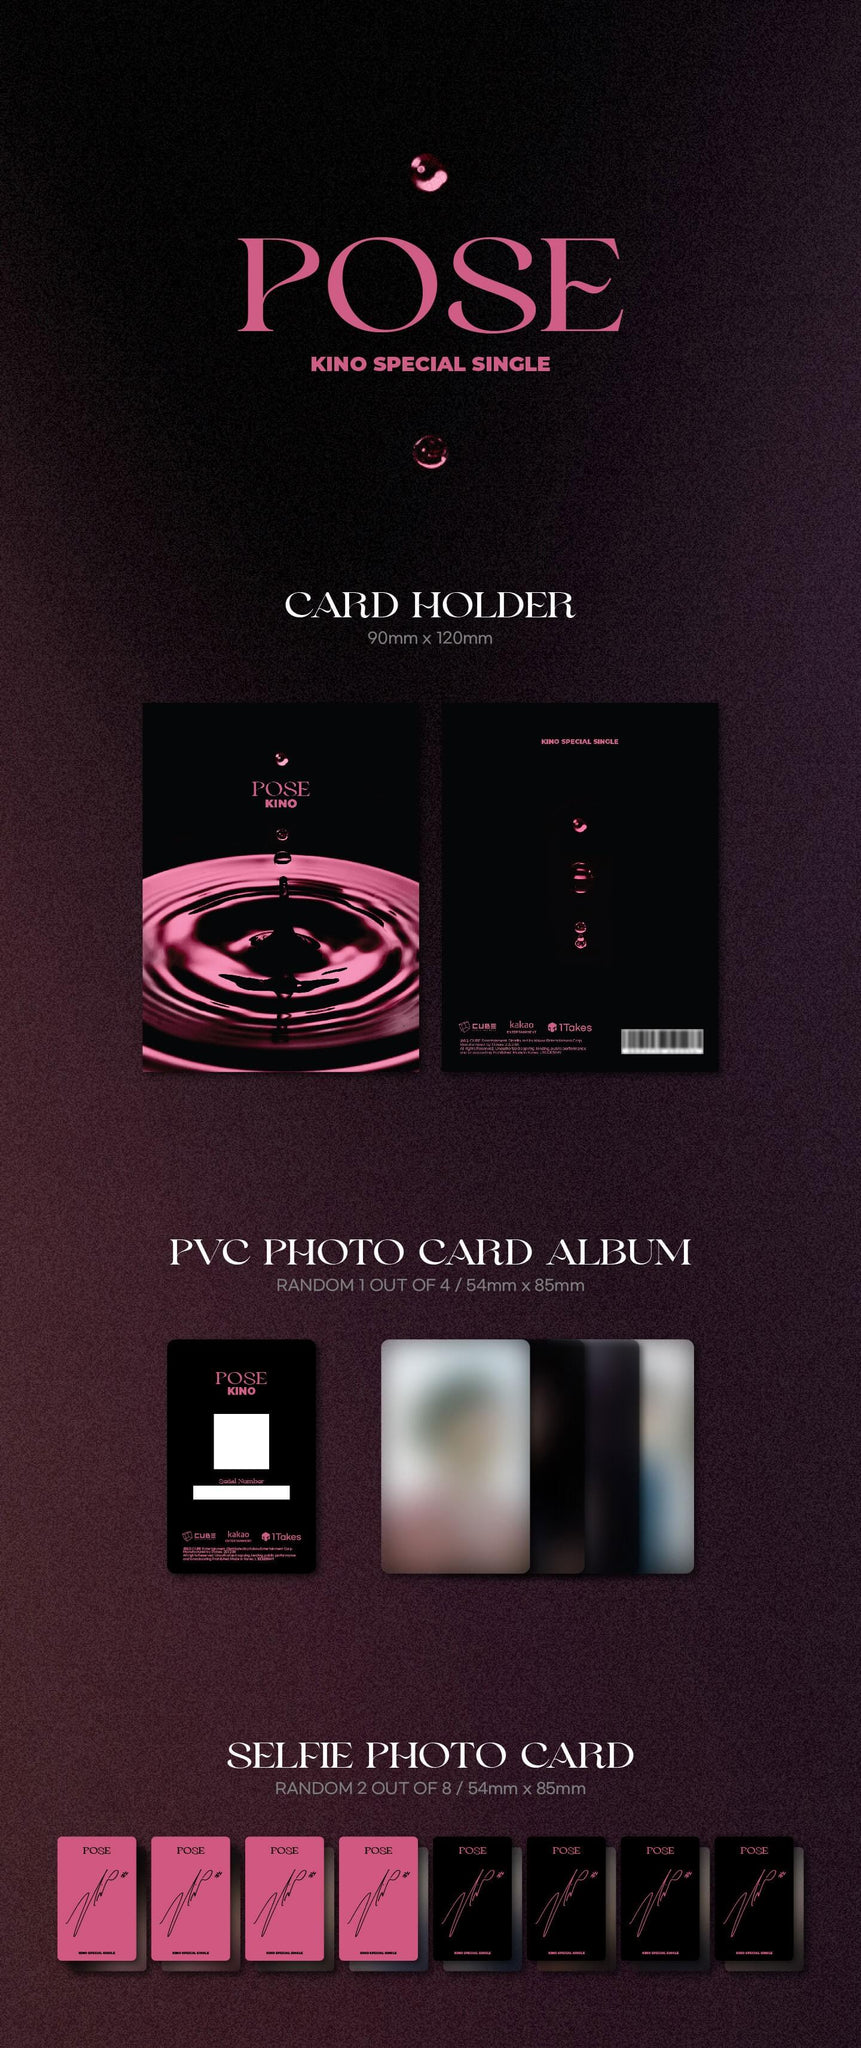 Kino Special Single Album POSE - Platform Version Inclusions Card Holder PVC Photocard Album Selfie Photocards